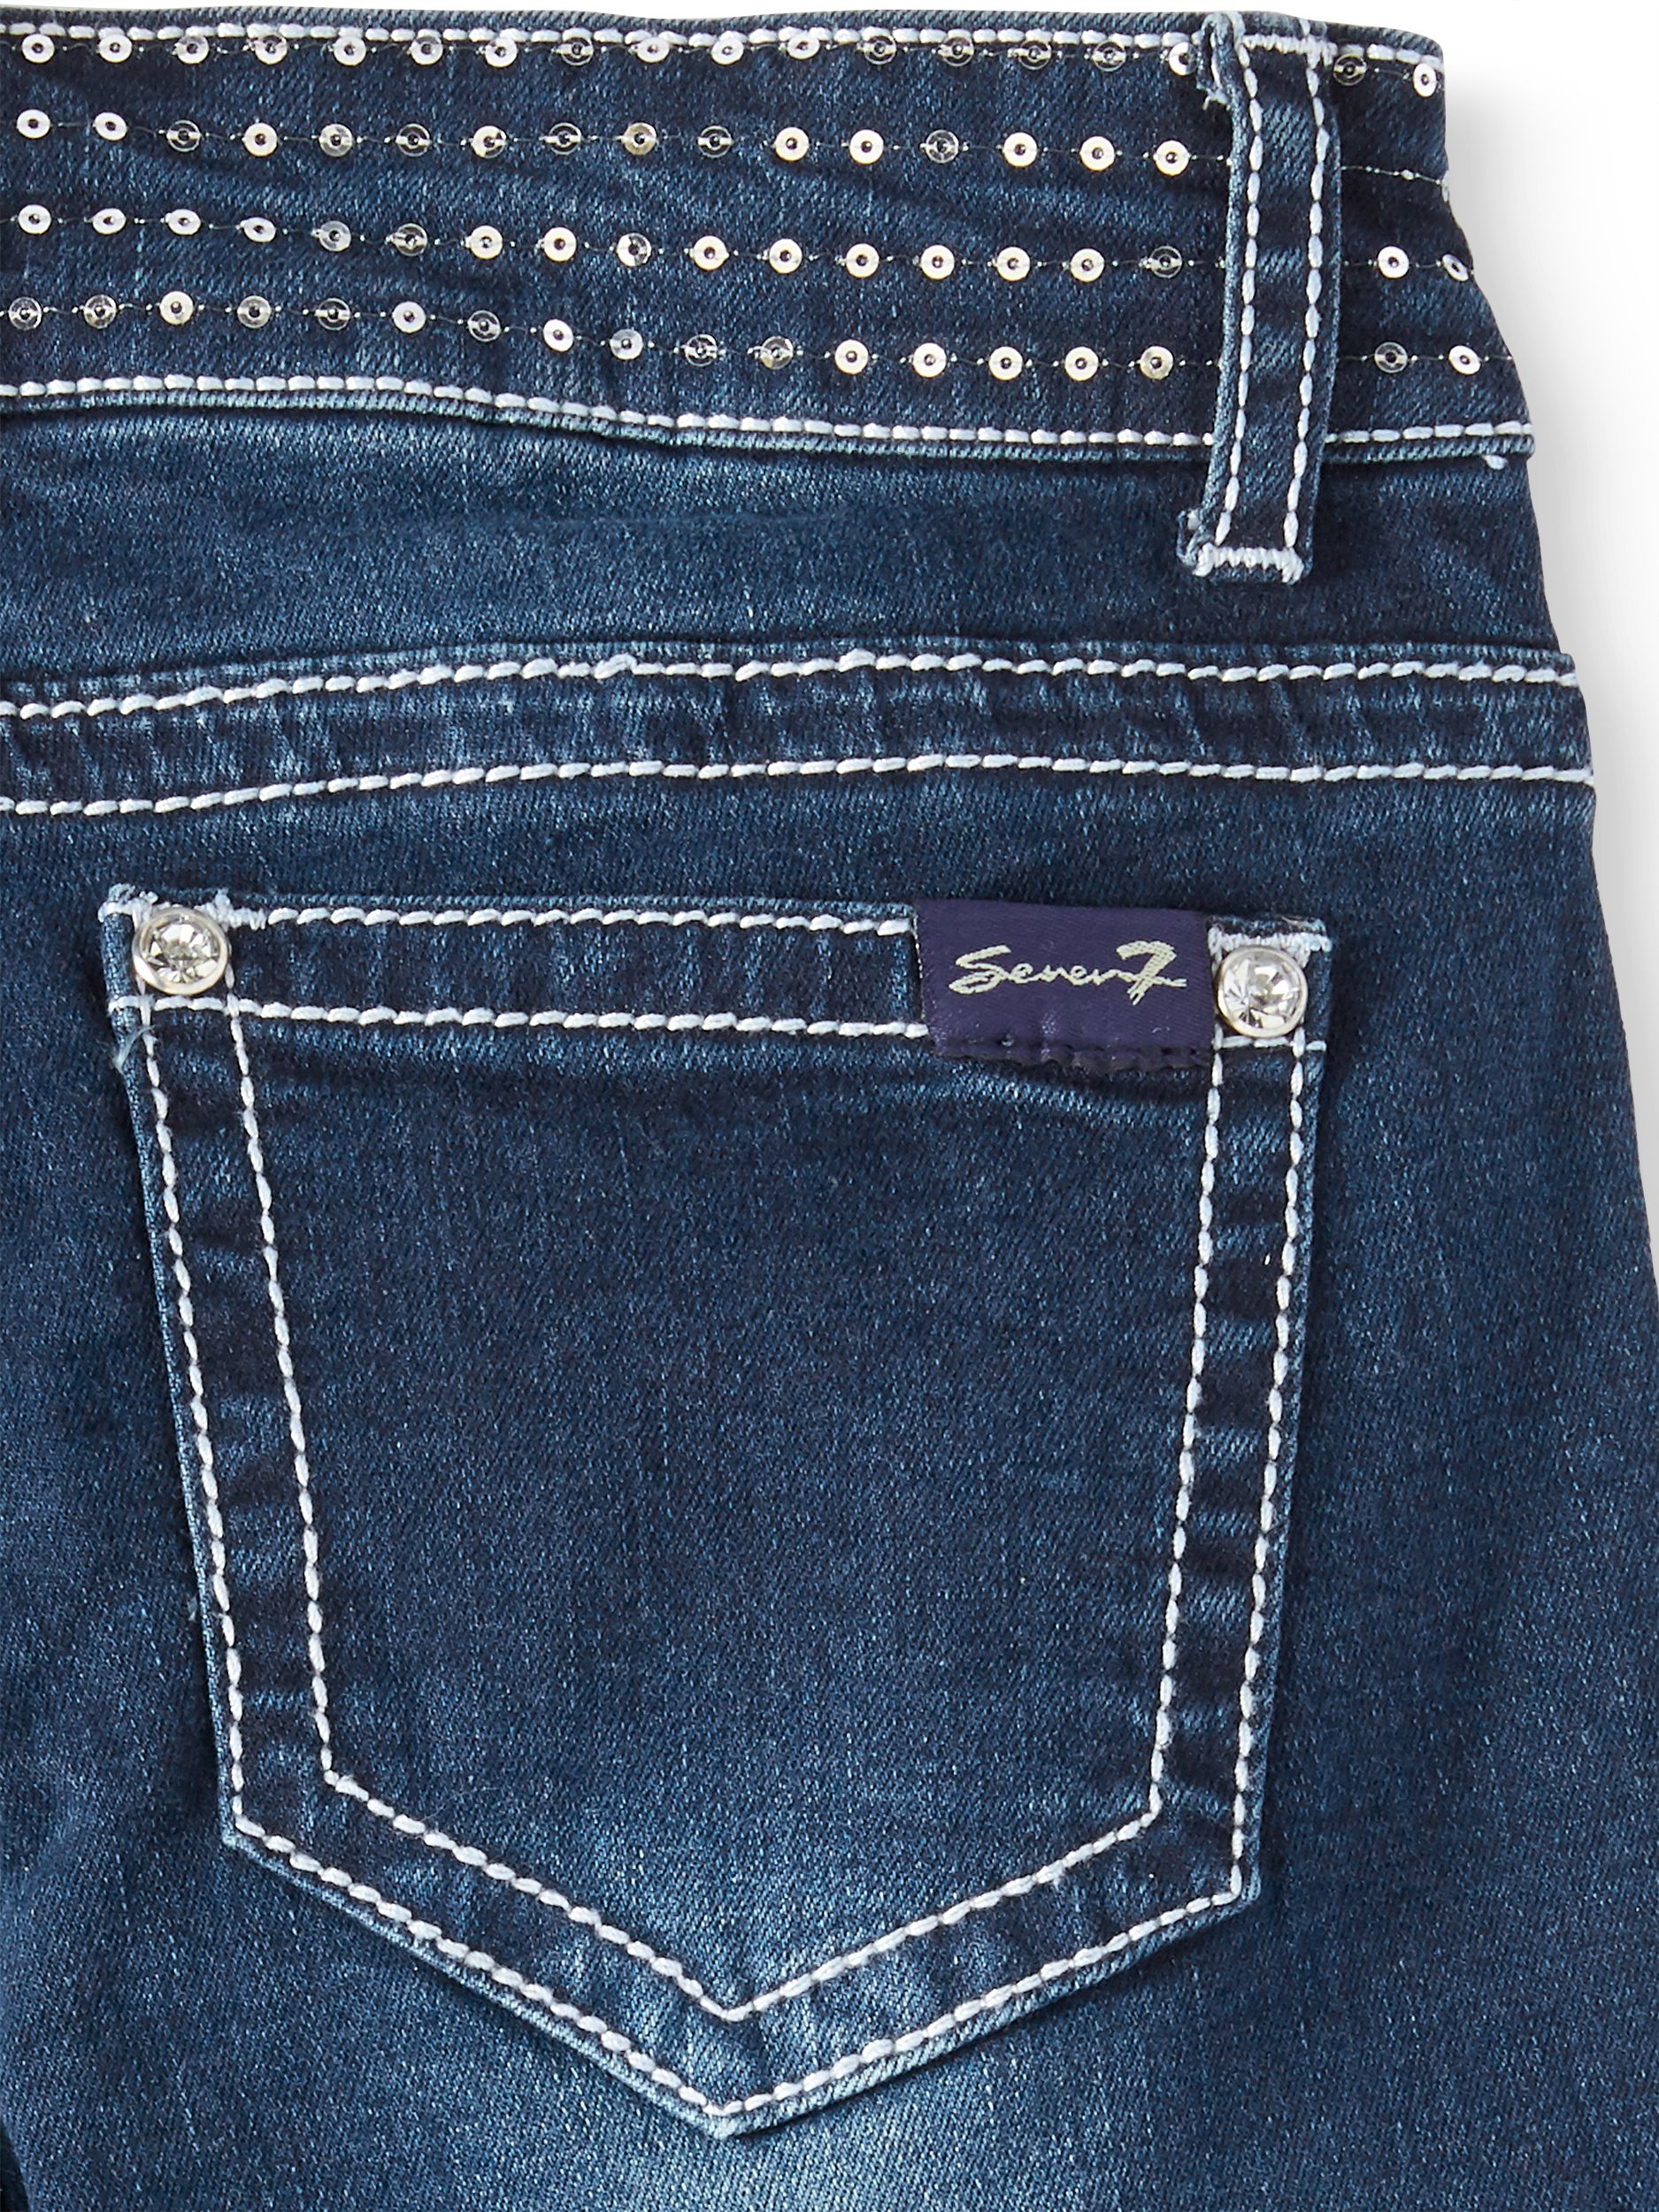 Seven7 Sequin Waist Boot Cut Jean (Big Girls) - image 2 of 3